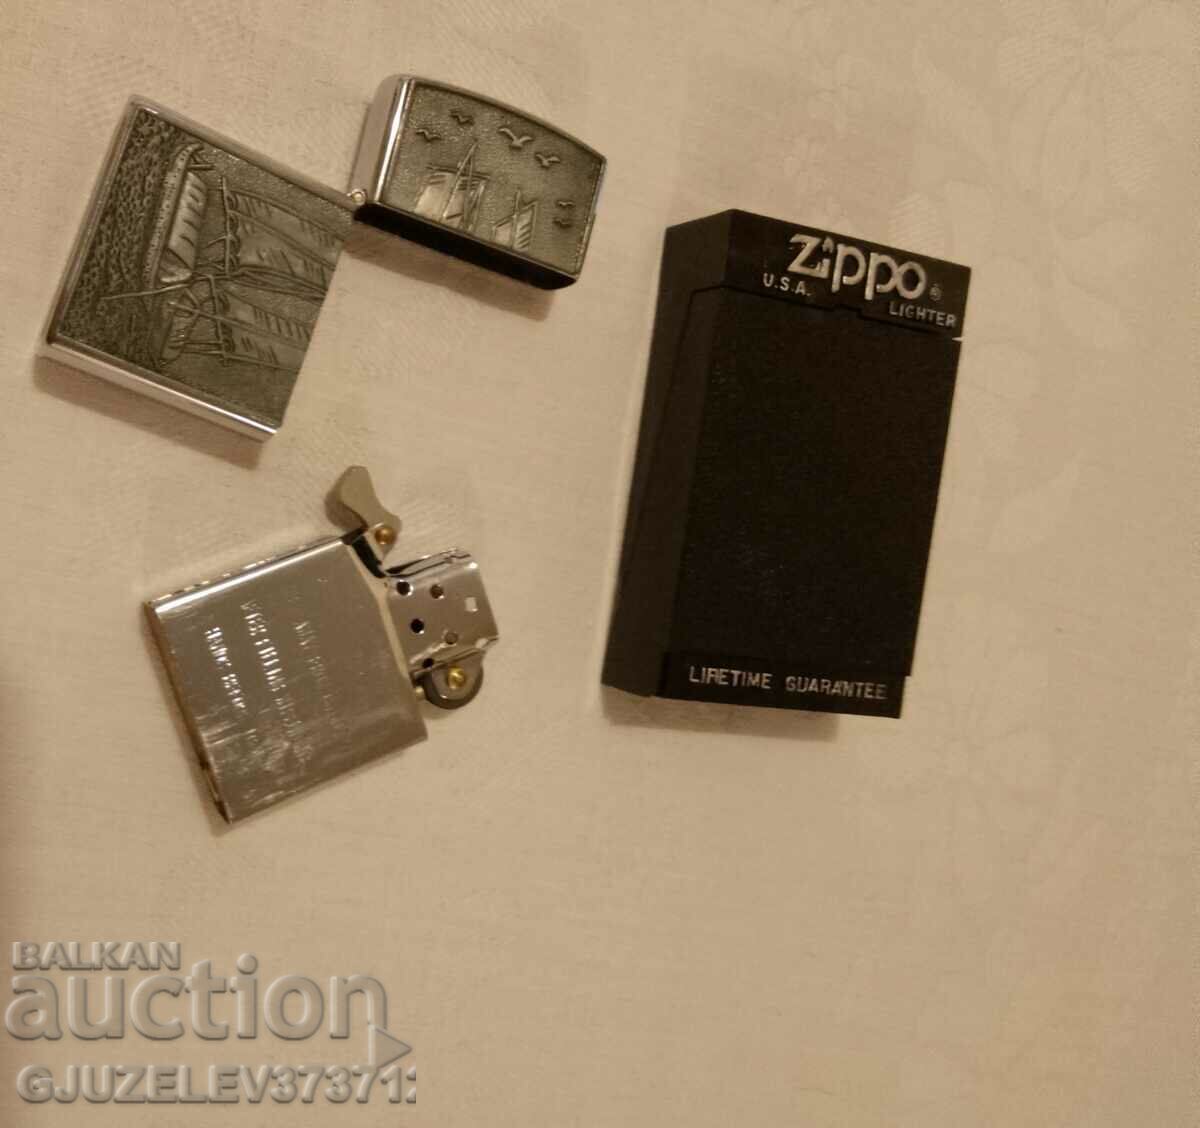 ZIPPO gasoline lighter, made in USA. With original box